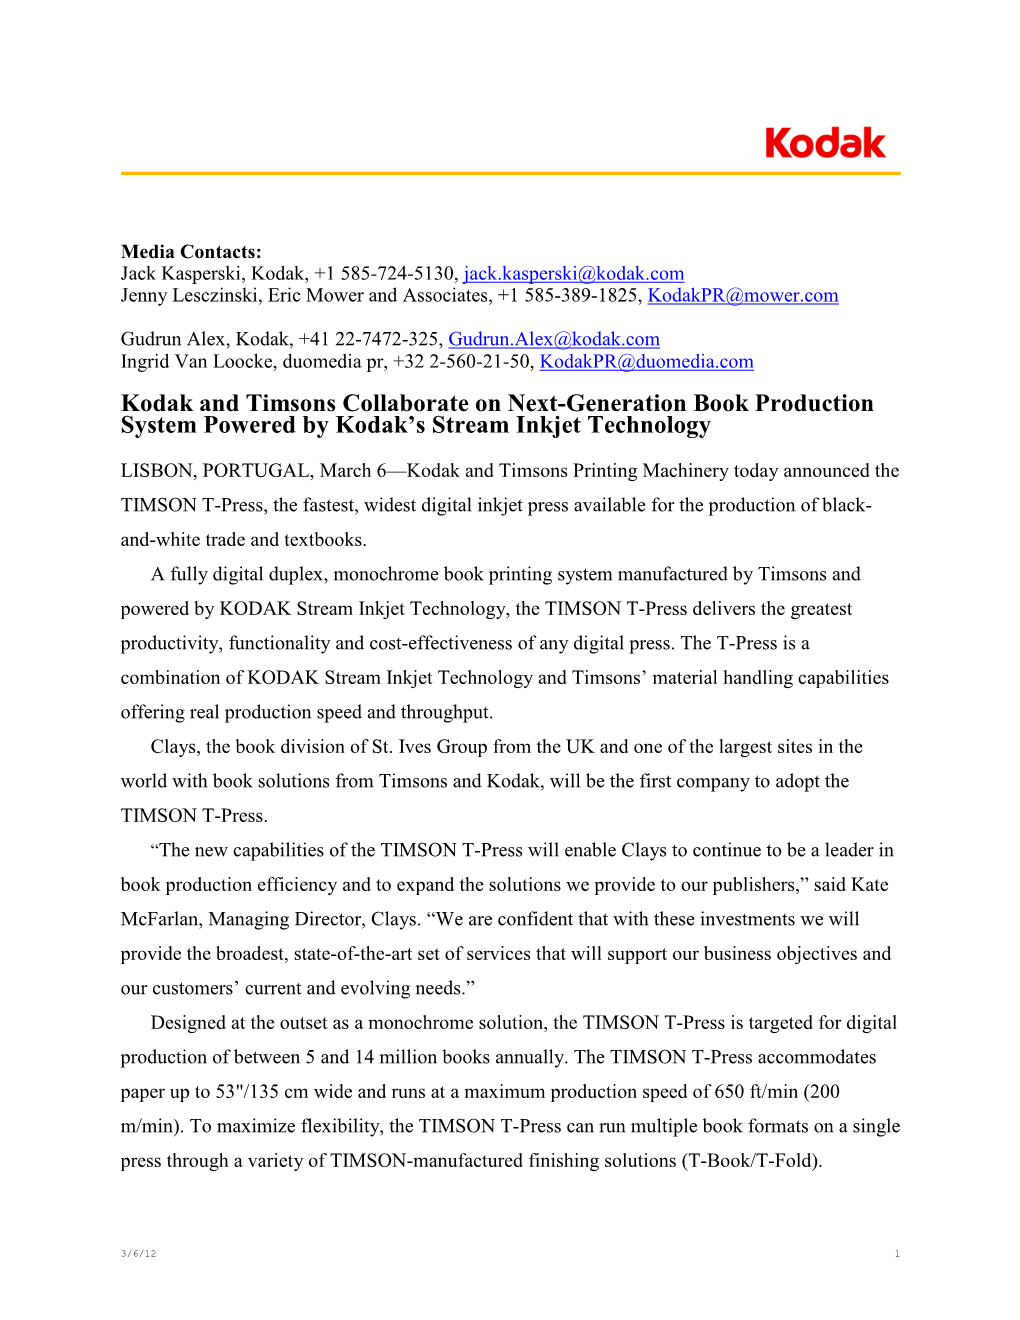 Kodak and Timsons Collaborate on Next-Generation Book Production System Powered by Kodak’S Stream Inkjet Technology